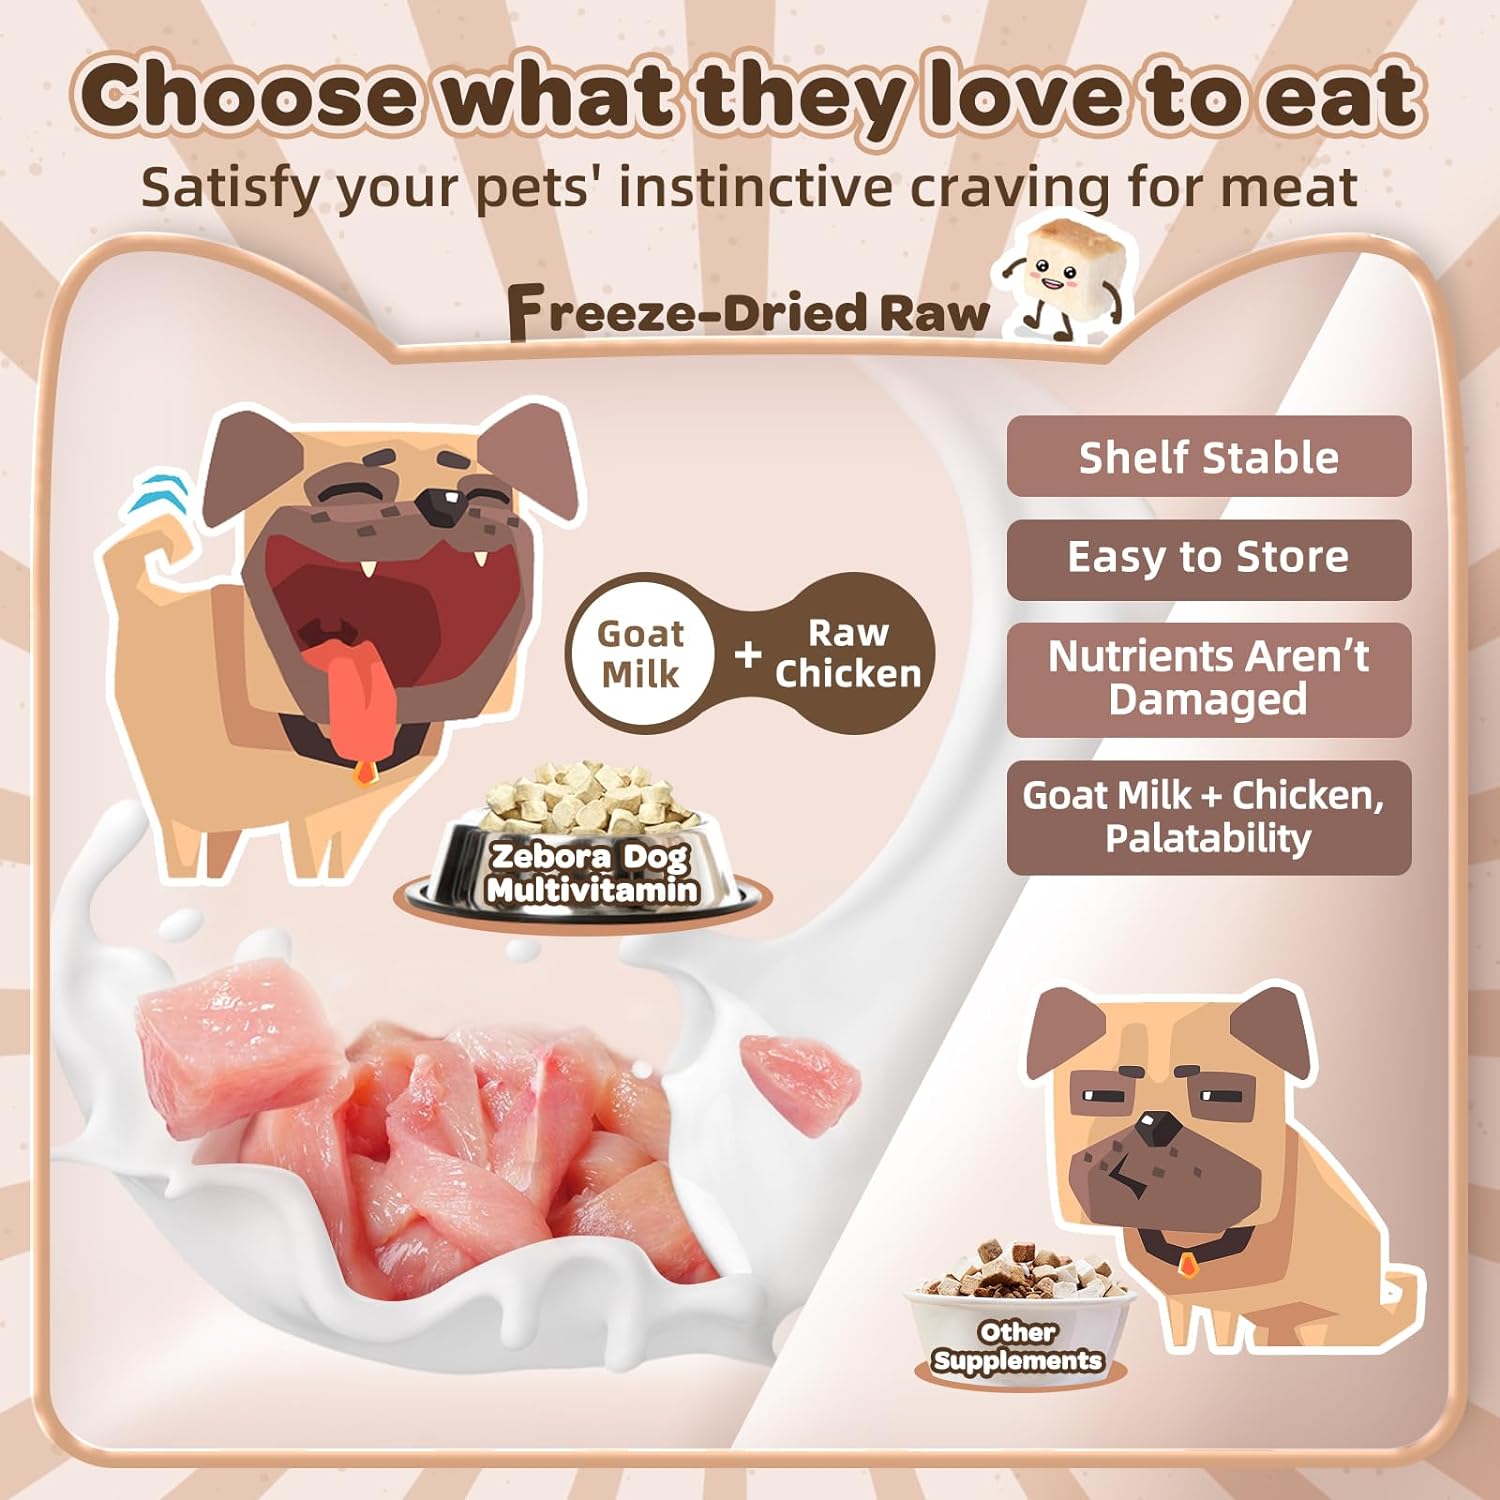 Zebora Dog Multivitamin Chews for Overall Health